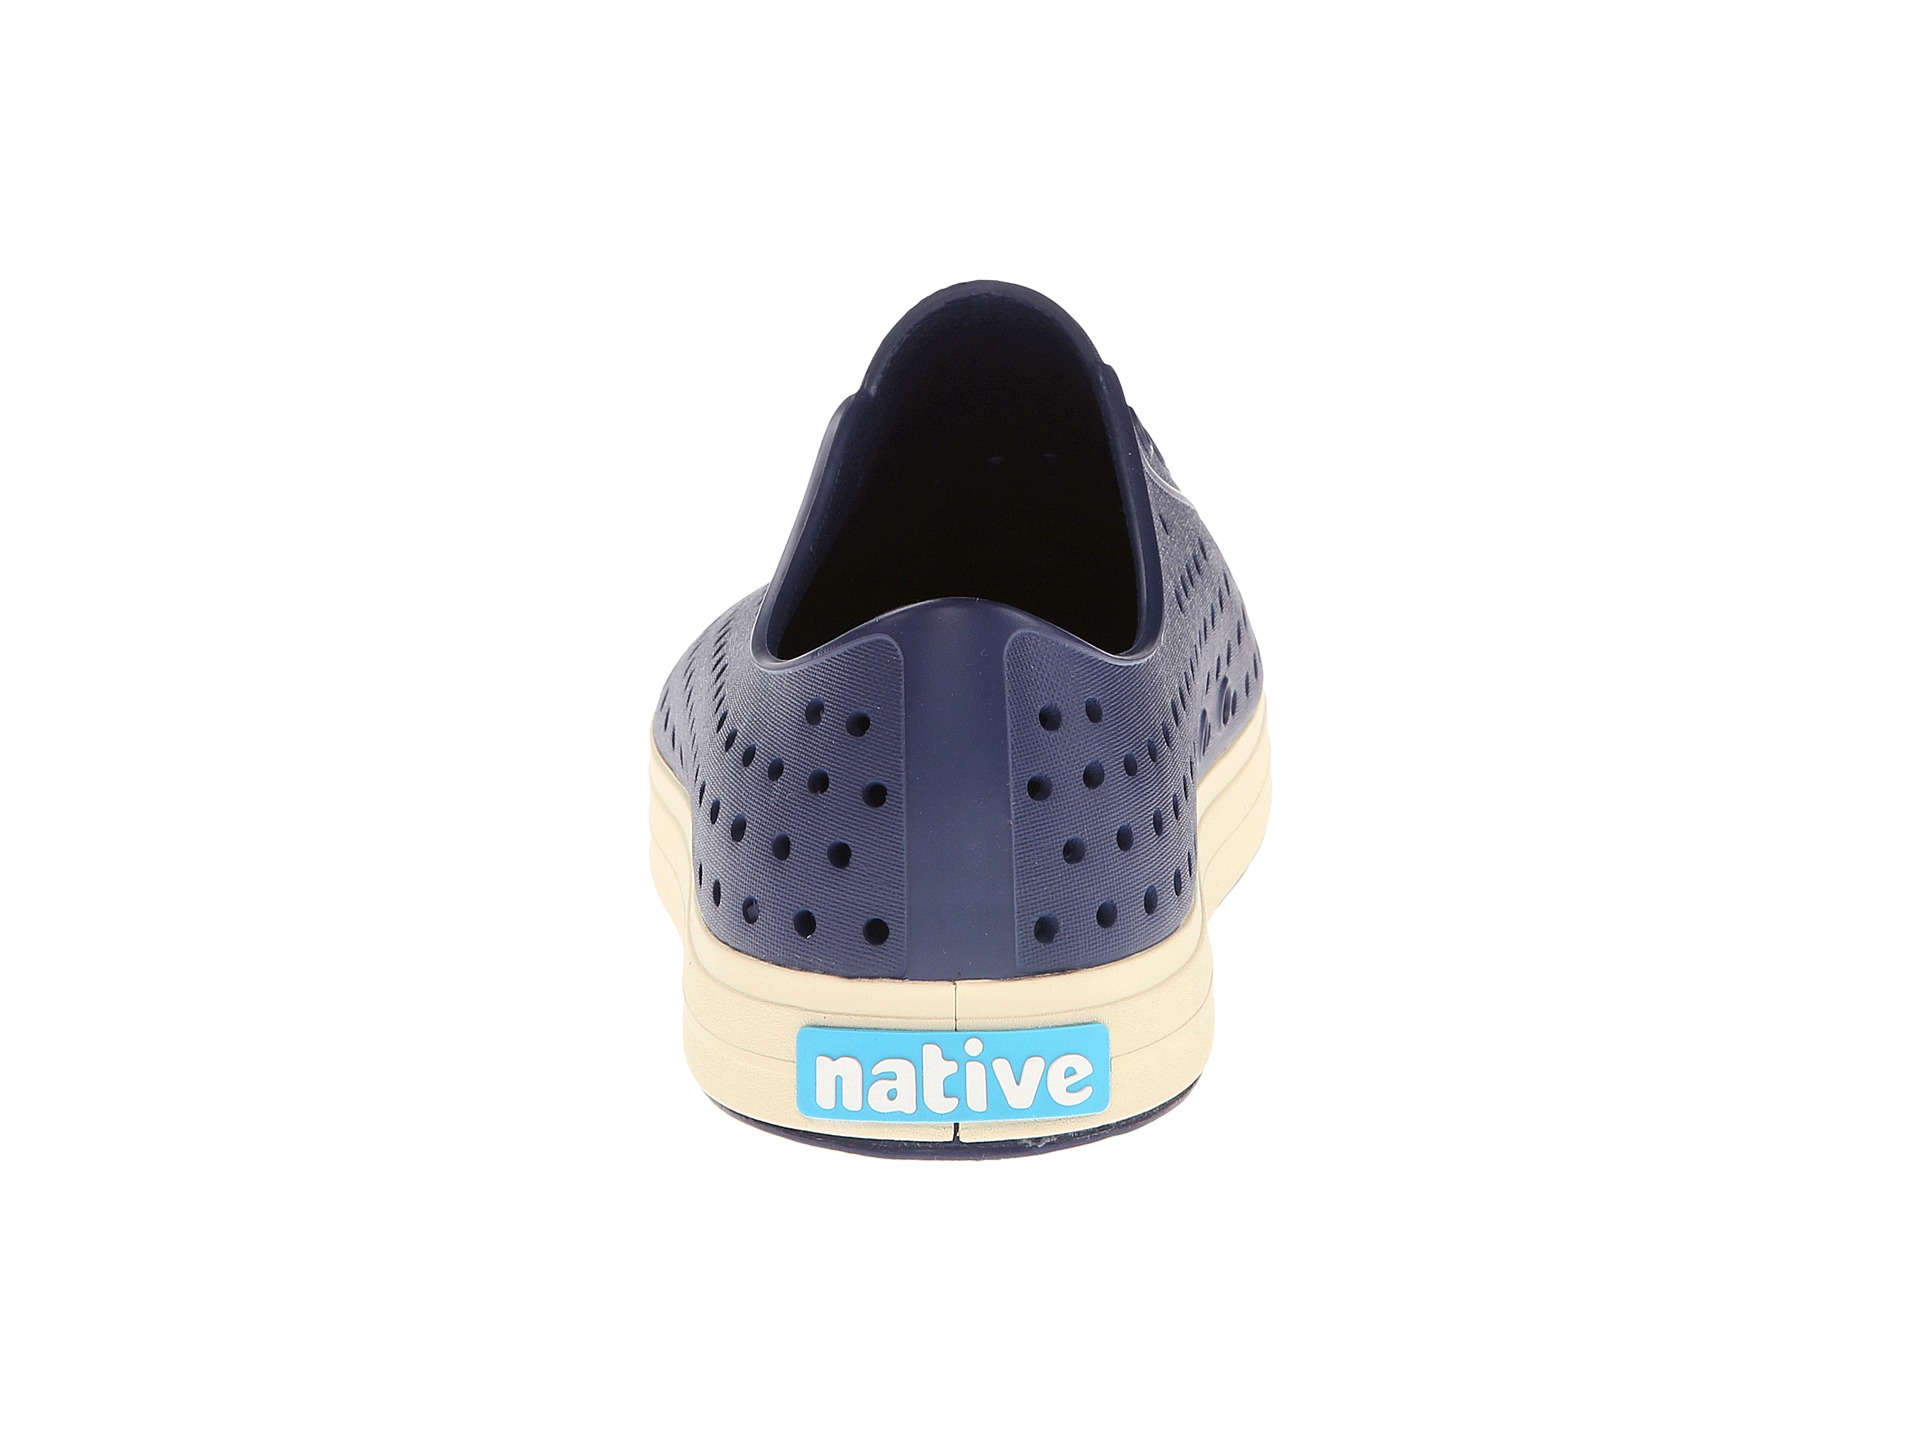 Native Shoes Jefferson - Zappos.com Free Shipping BOTH Ways